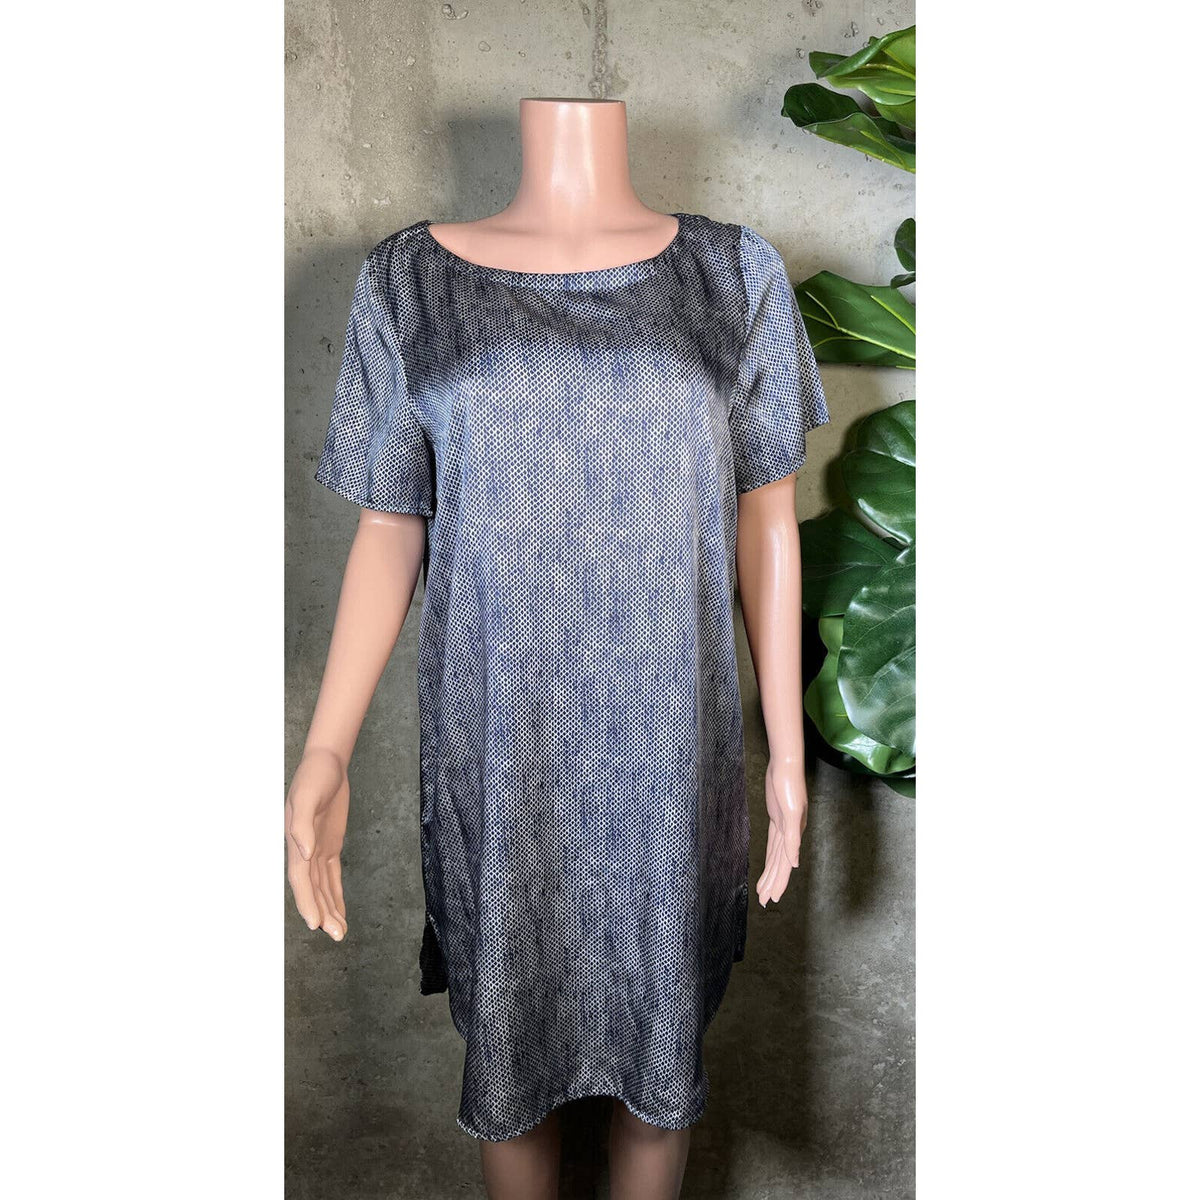 Eileen Fisher Silk Patterned Dress Sz. Medium NEW